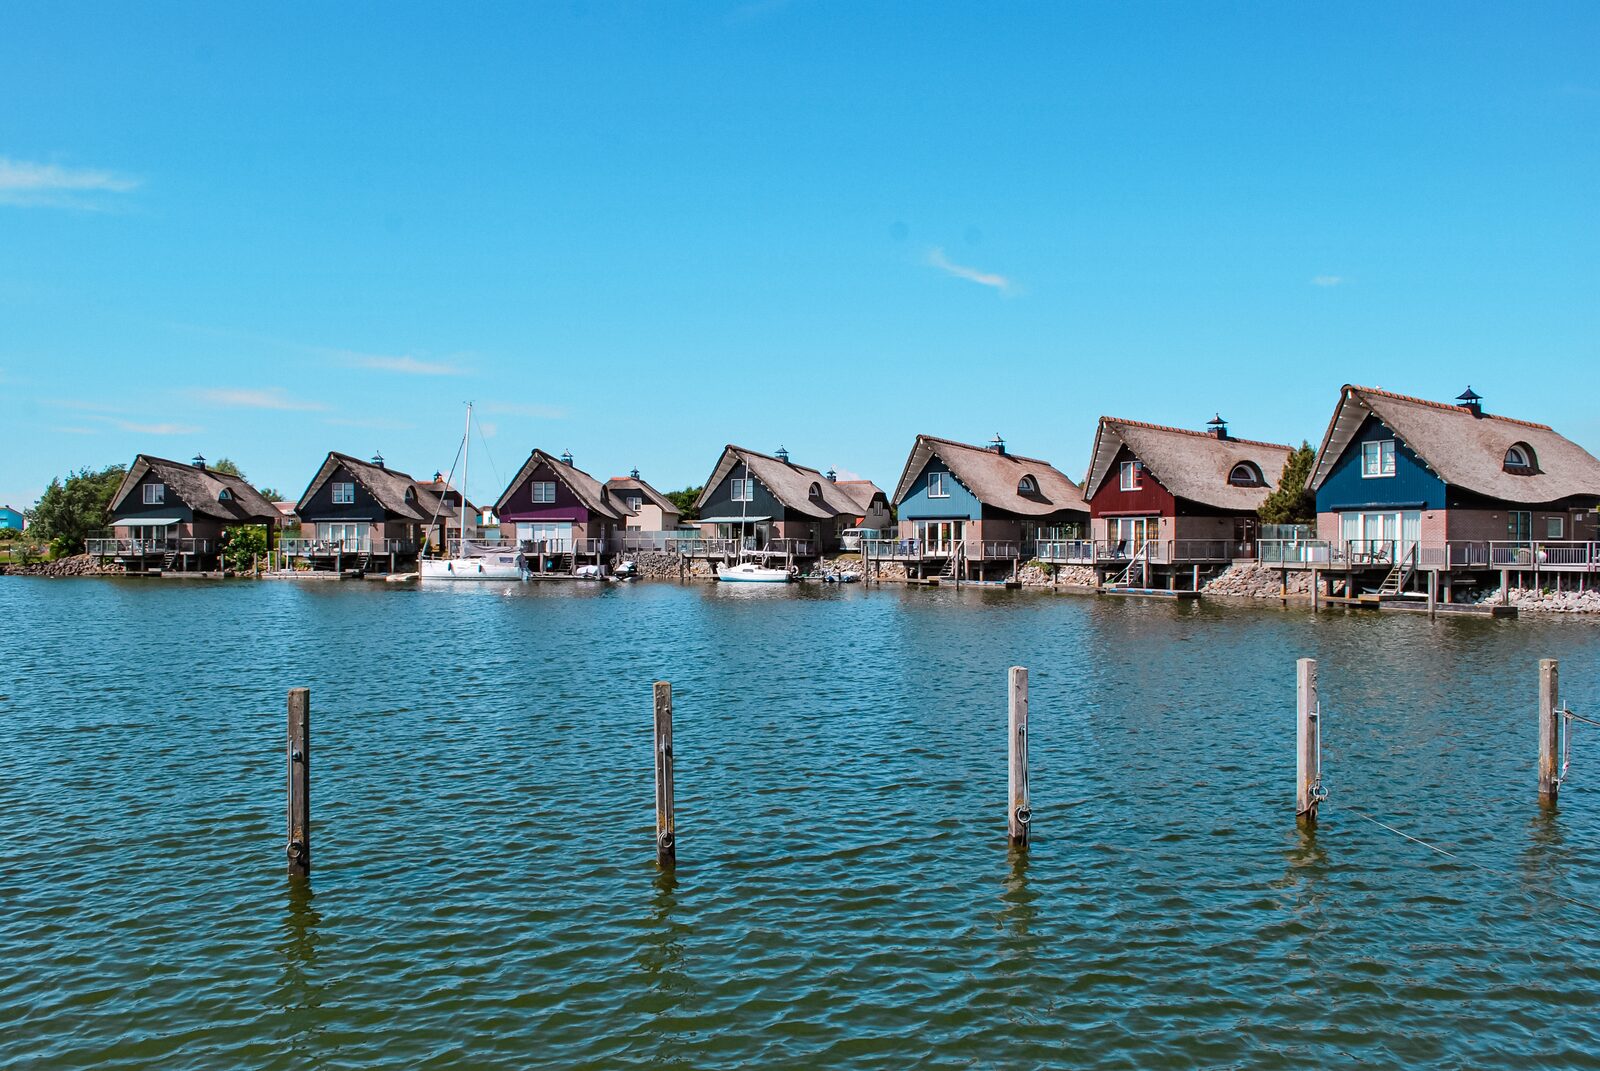 Ferienhaus am IJsselmeer mit Bootssteg